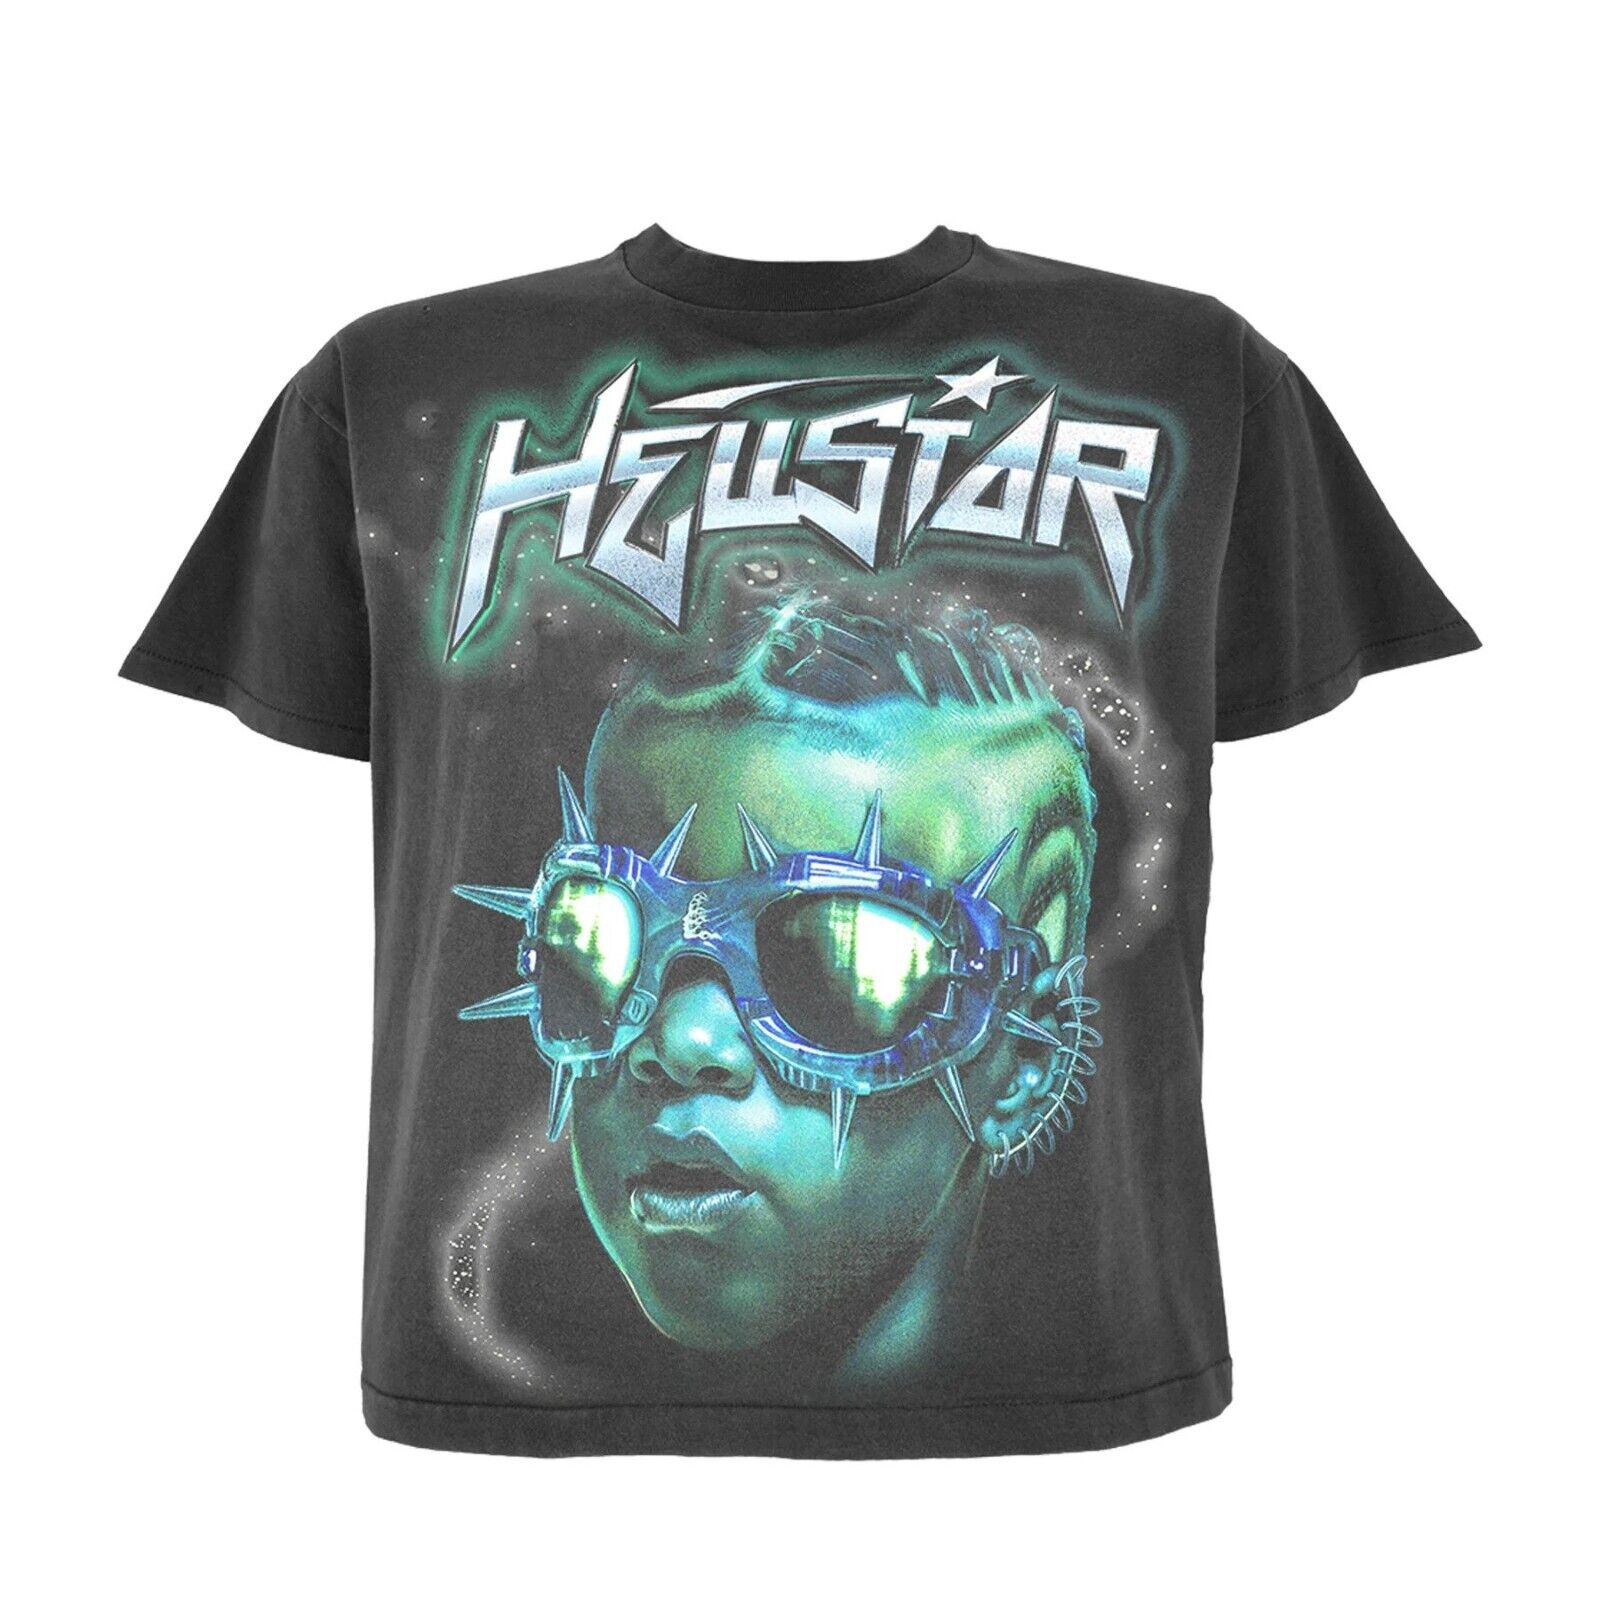 HELLSTAR "The Future" T-Shirt